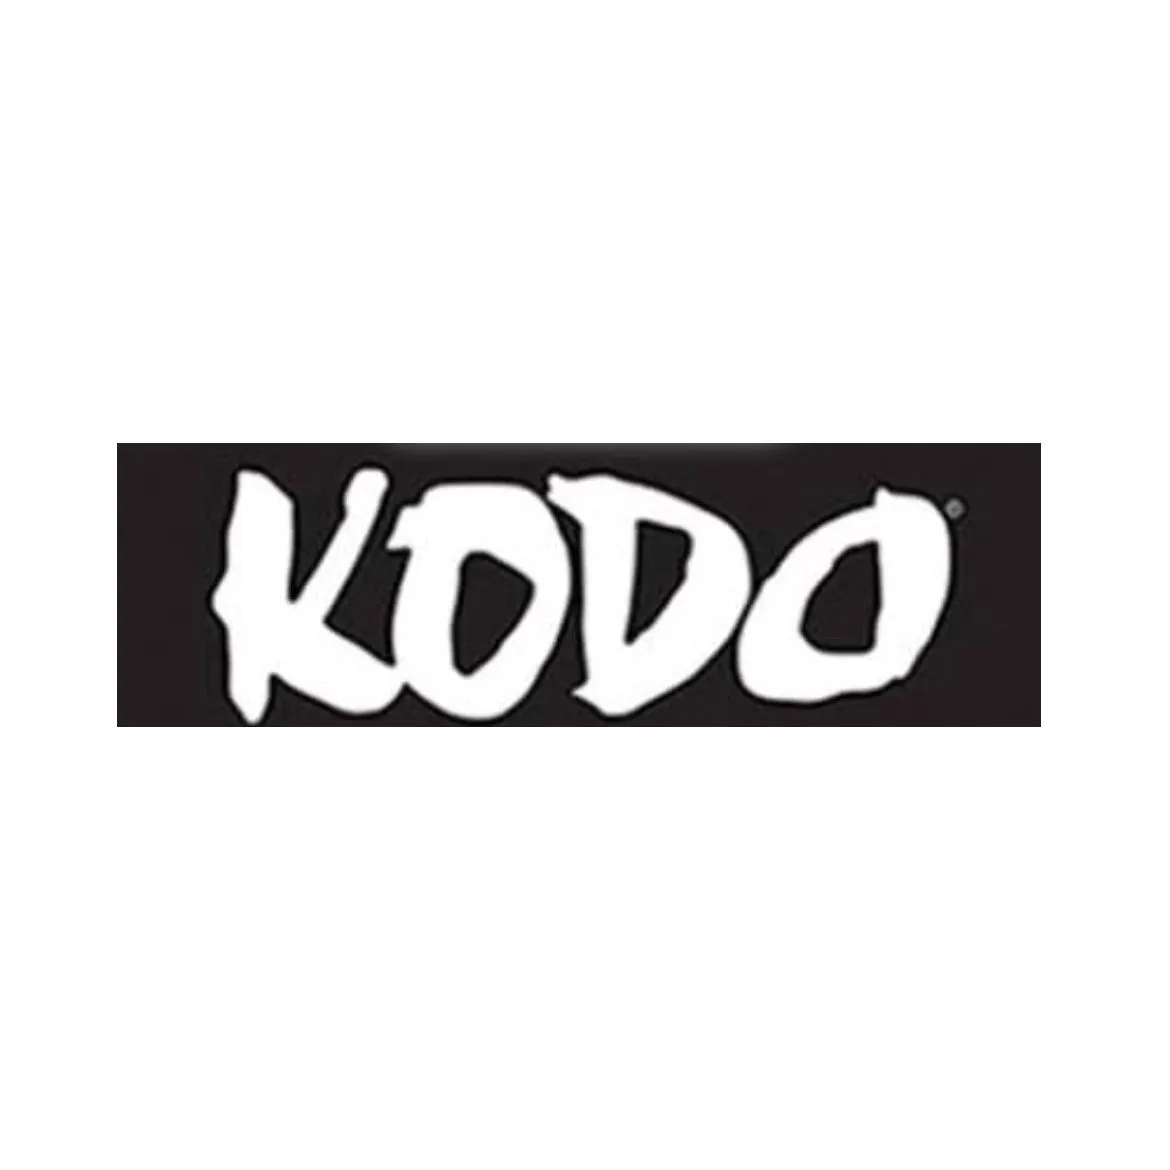 Kodo Brushes